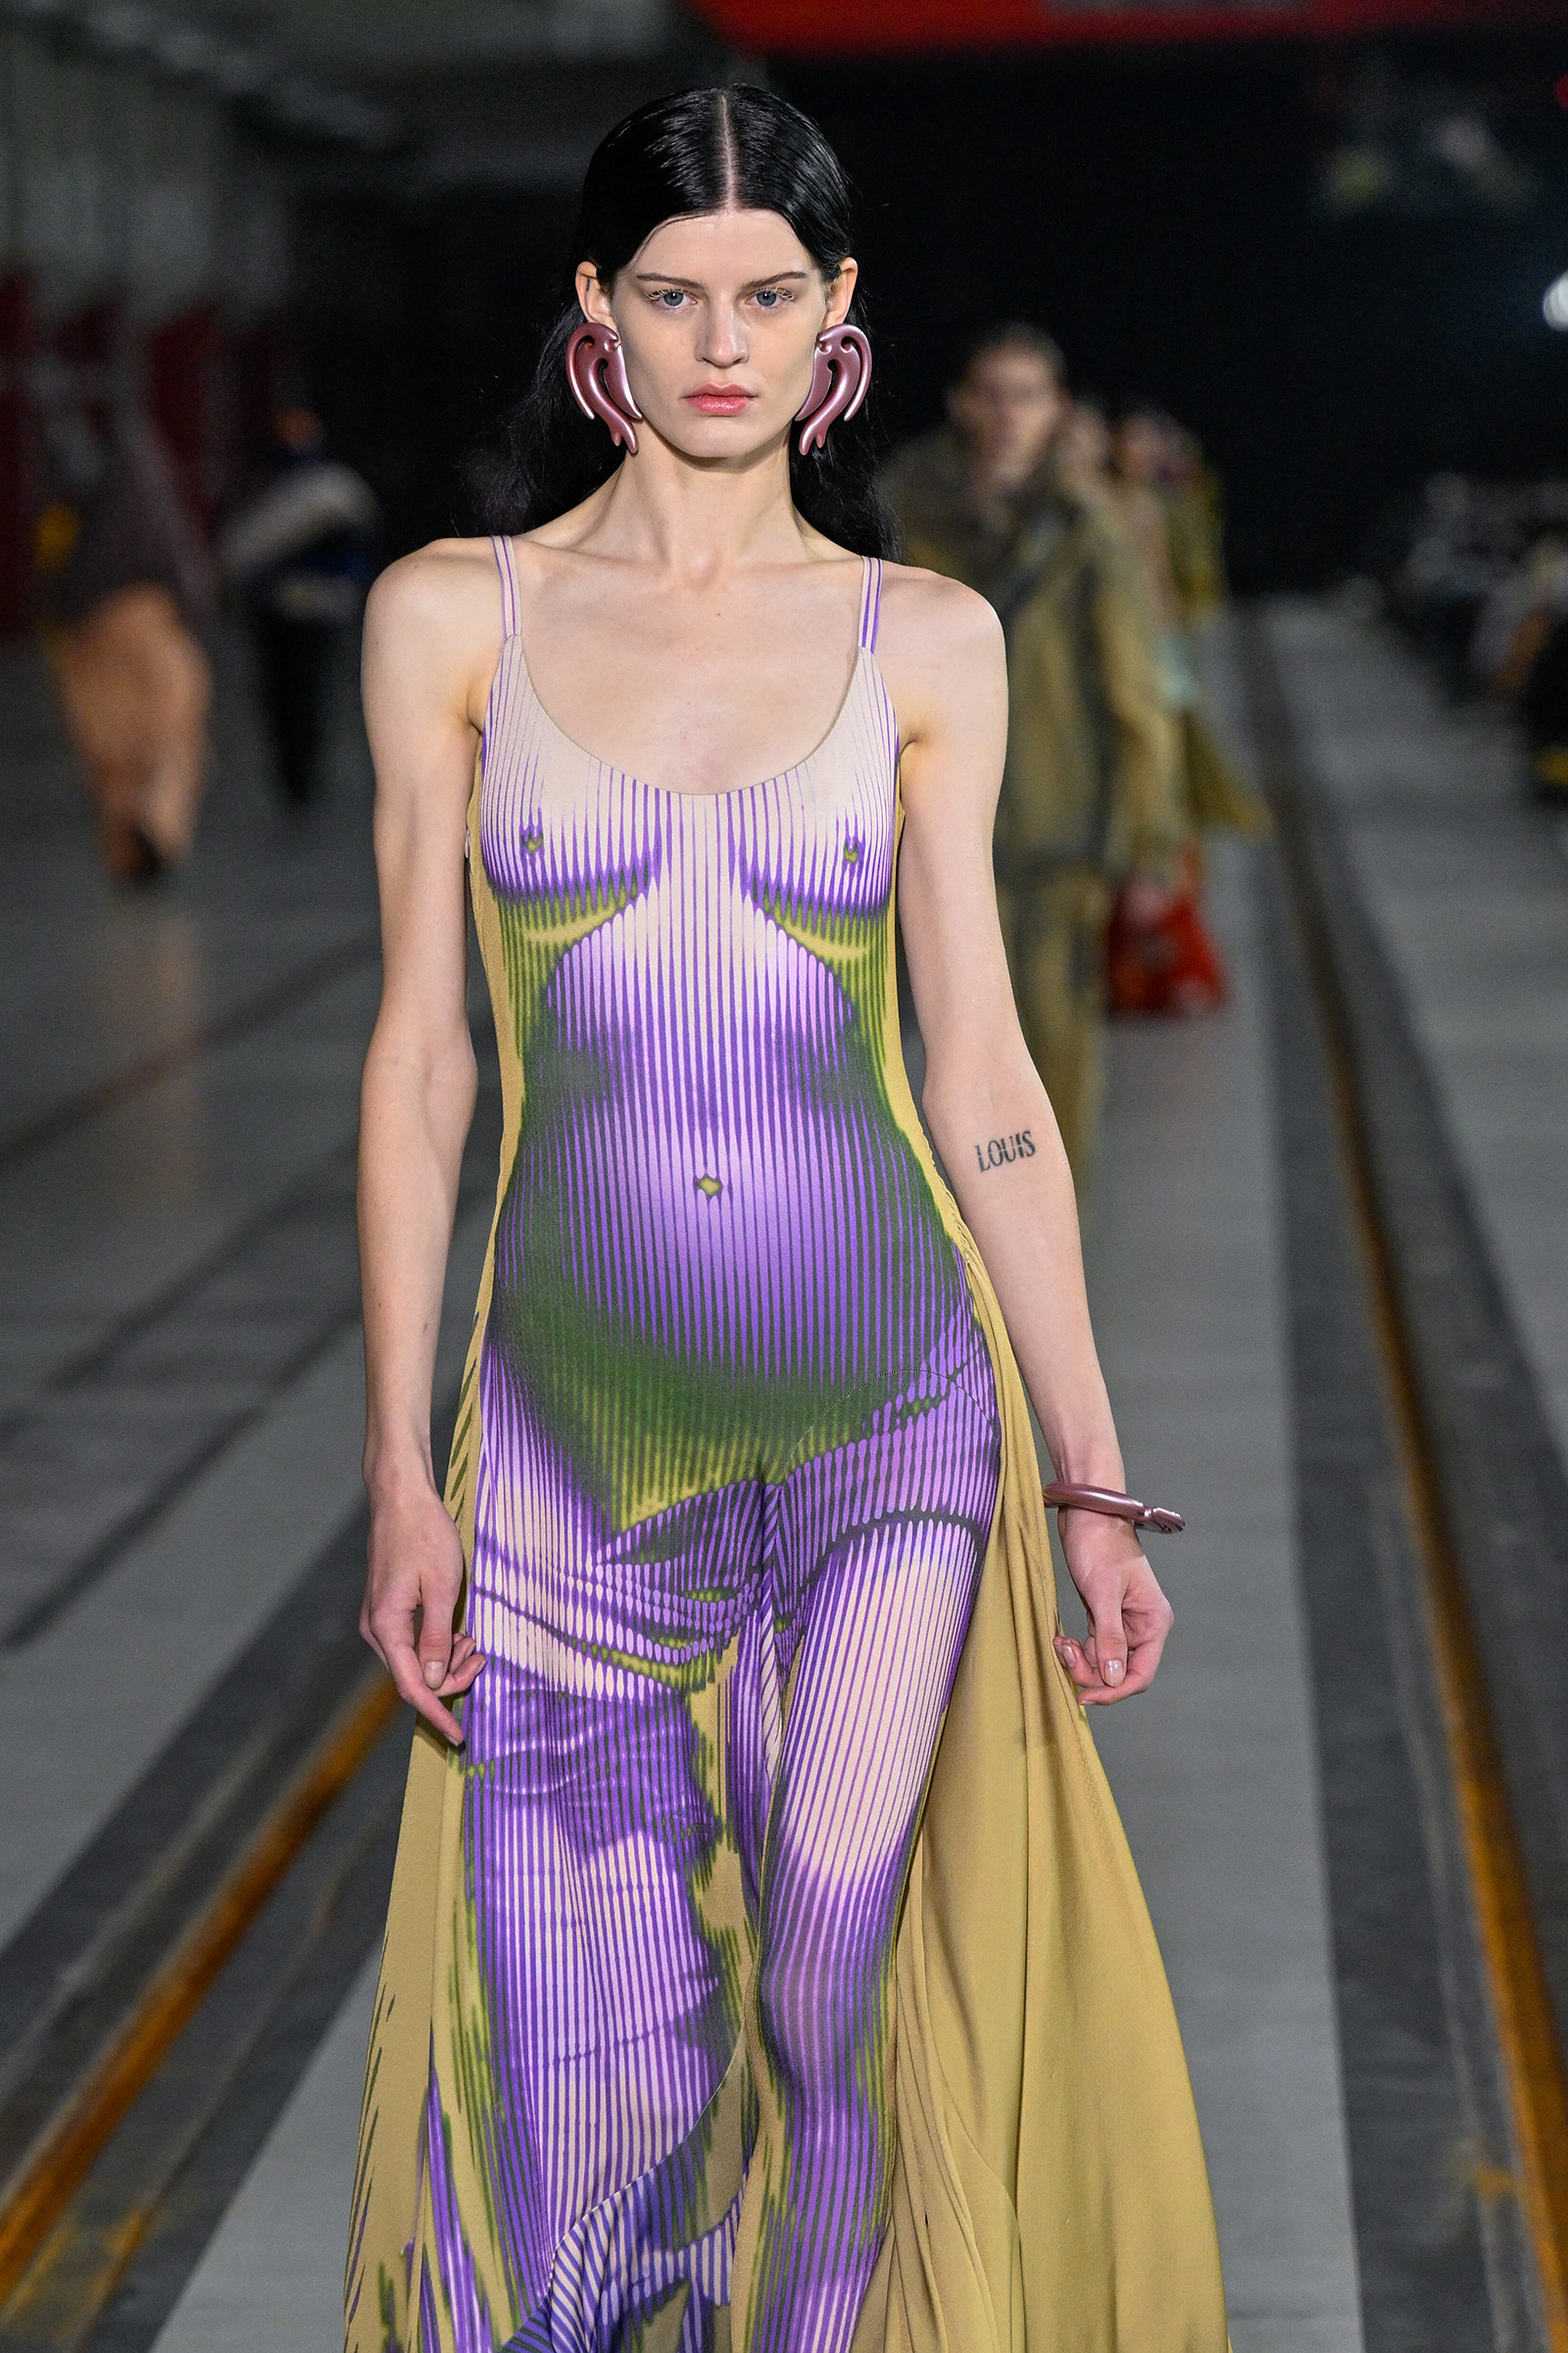 Butifull fashion tv models naked walking images - Sex archive